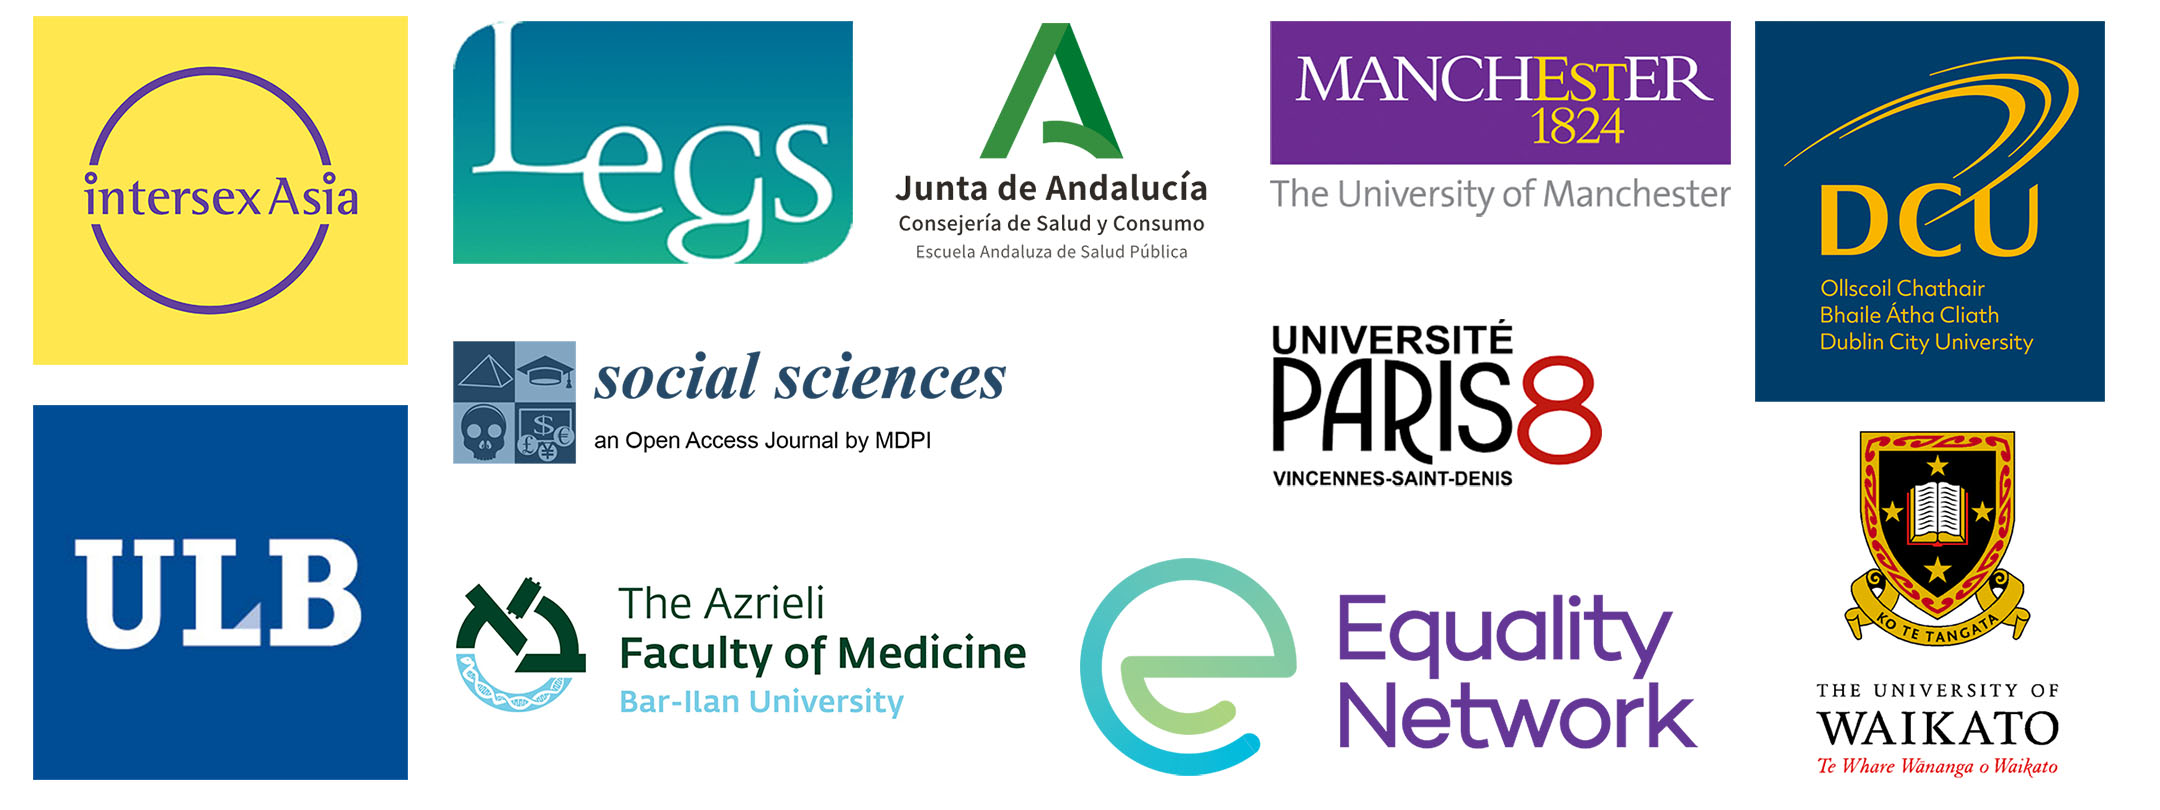 Logos of organisations involved in organising the conference: Intersex Asia; ULB; Legs; Social Sciences; The Azrieli Faculty of Medicine' Junta de Andalucia; Universitie Paris; University of Manchester; DCU; University of Waikato